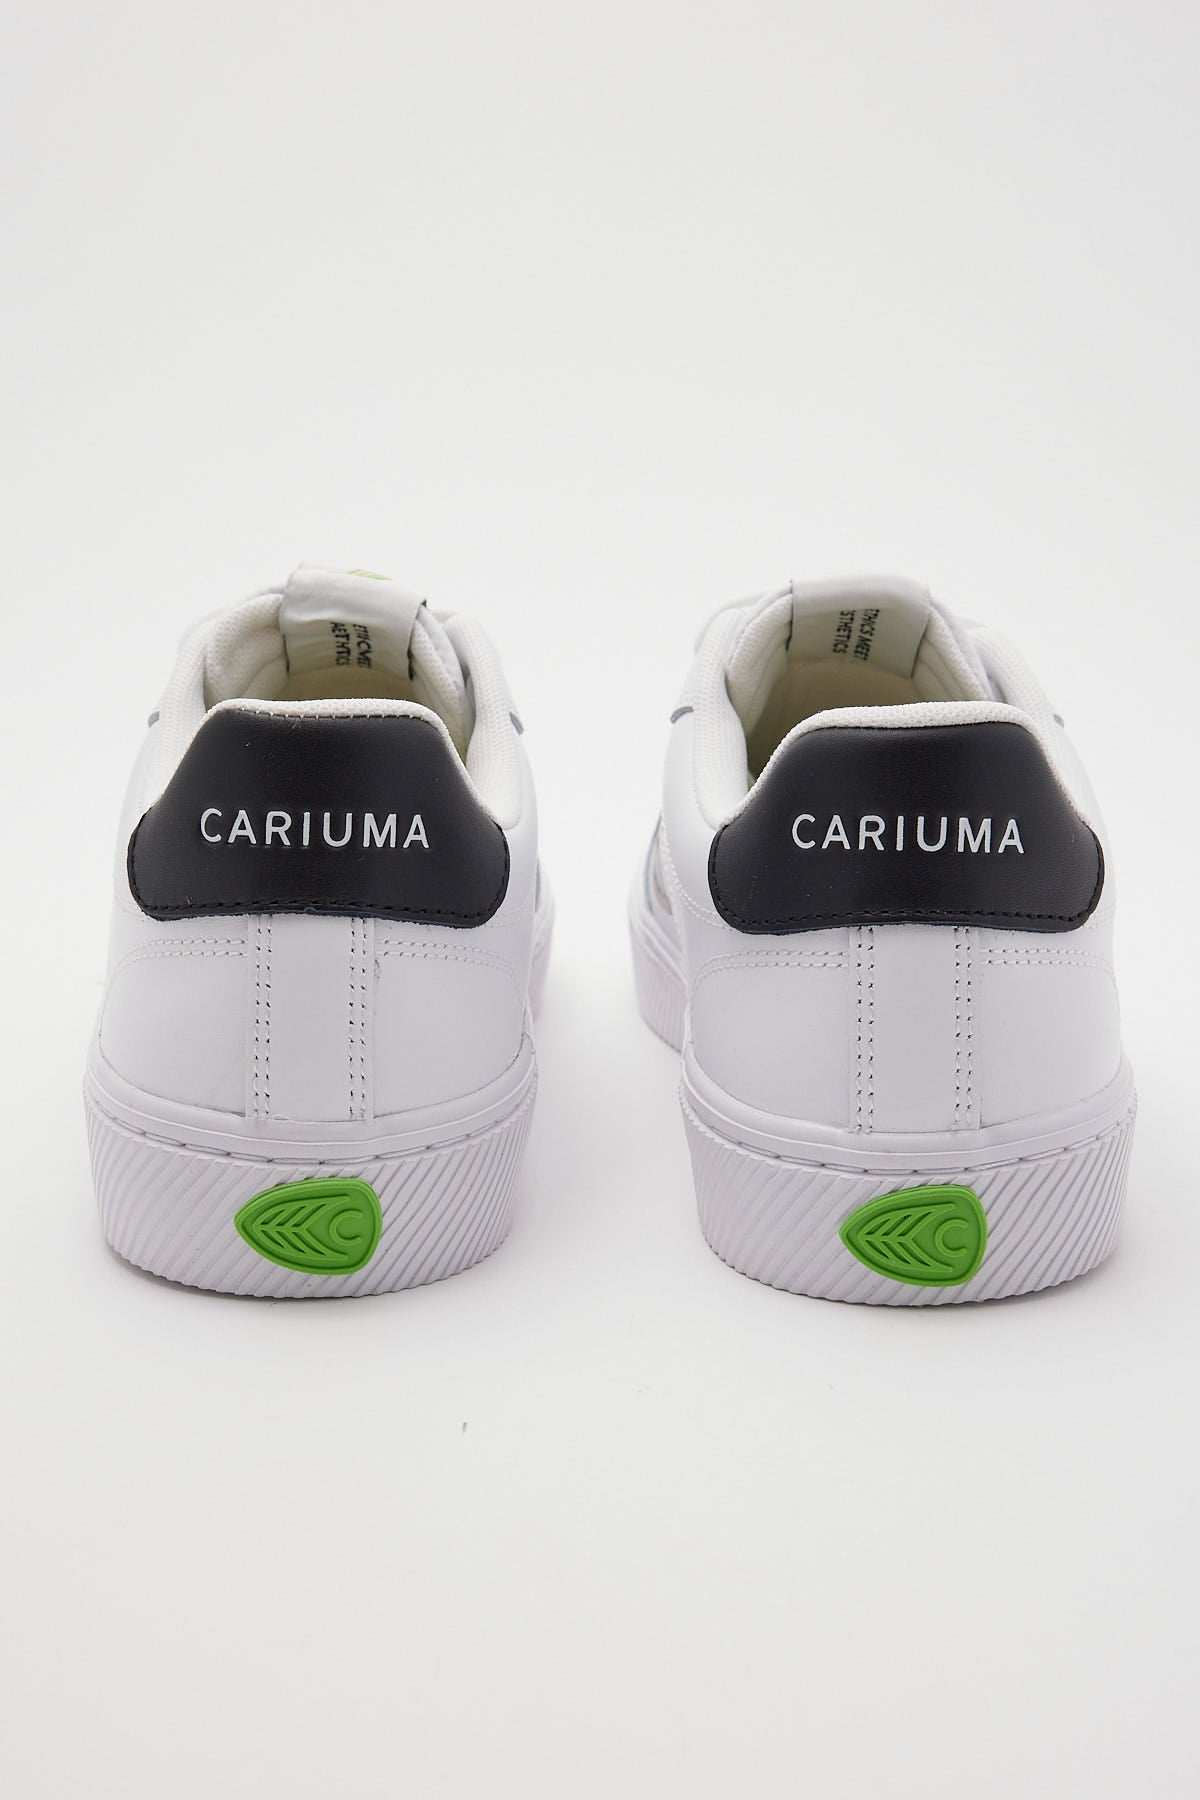 Cariuma Salvas Leather Sneaker White Black